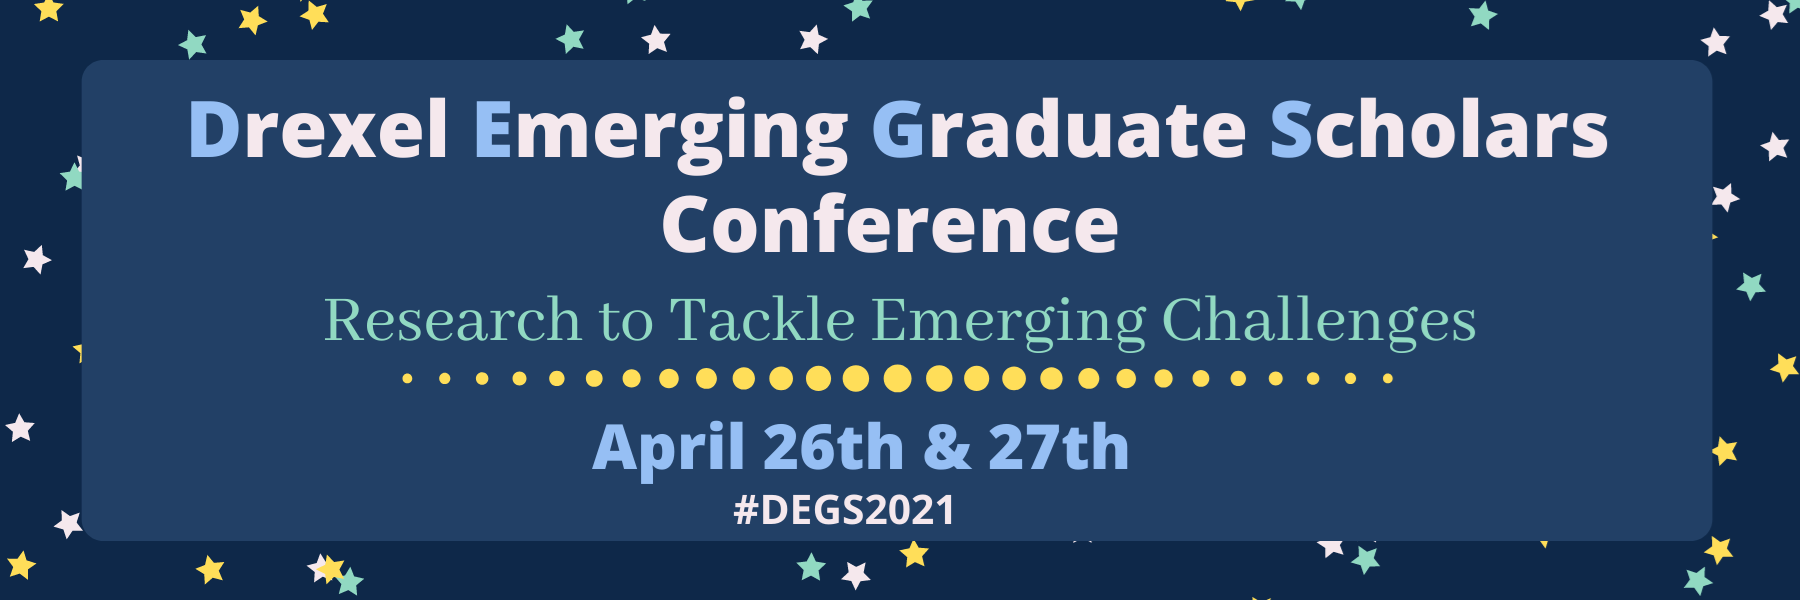 Drexel Emerging Graduate Scholars Conference April 26 and 27